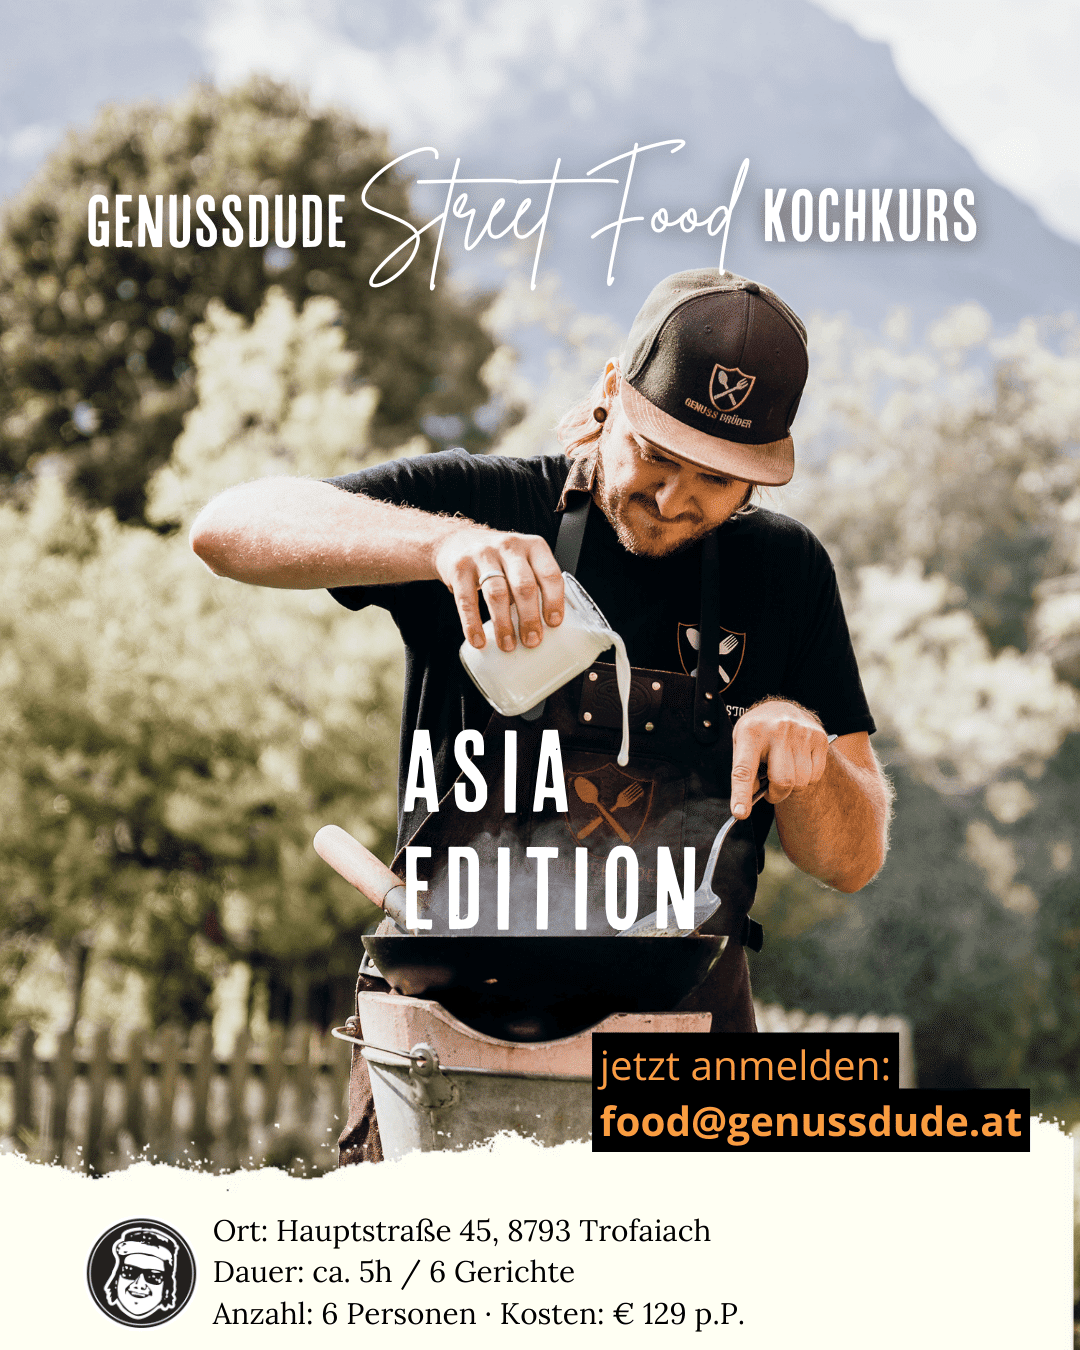 GenussDude Street Food Kochkurs Asia Edition